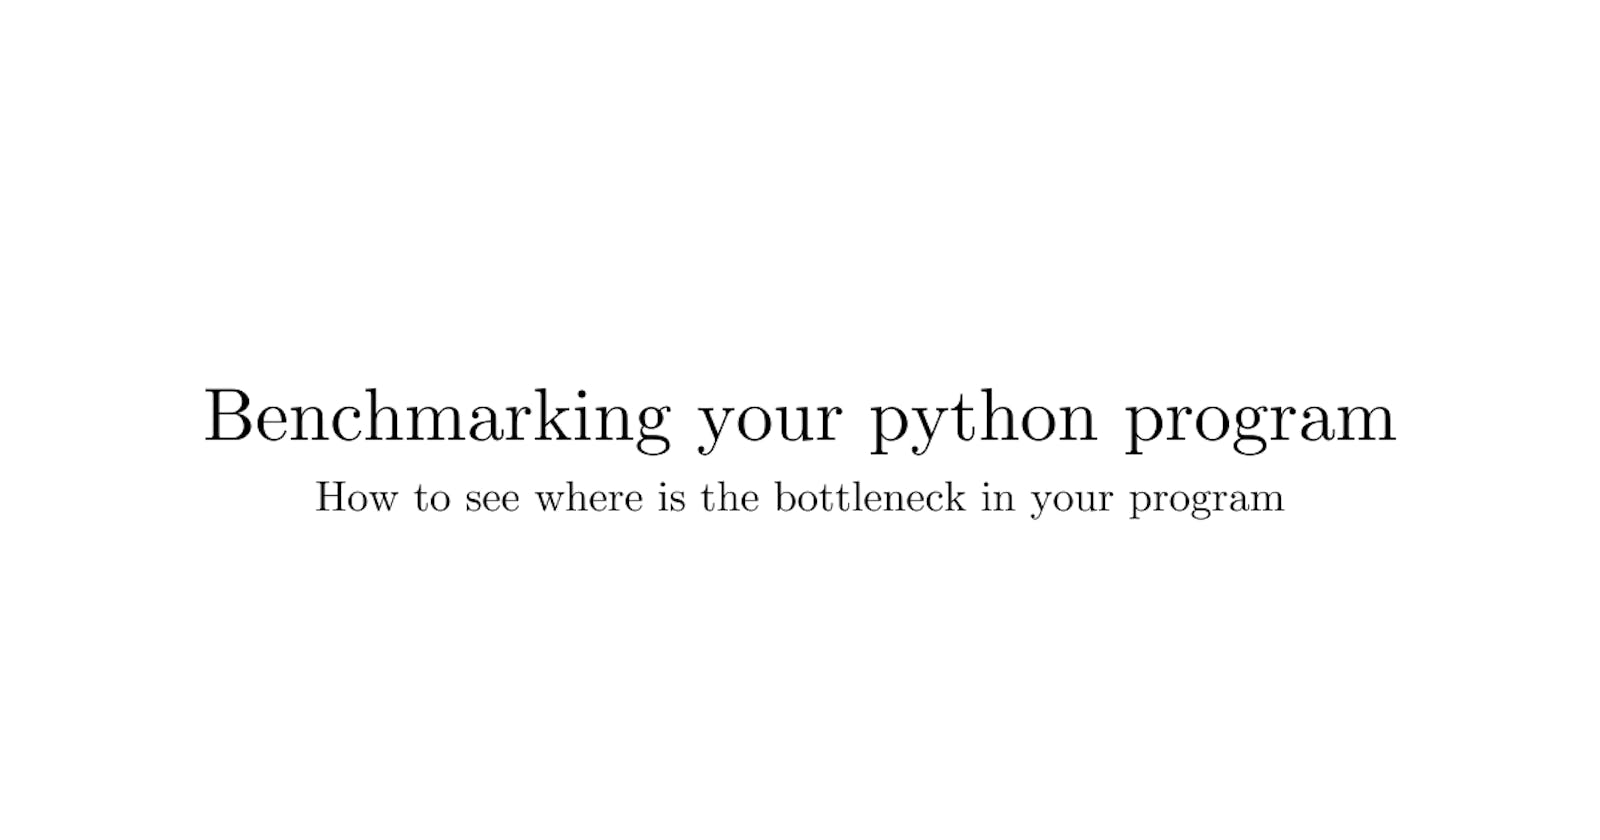 How to benchmark your python program?